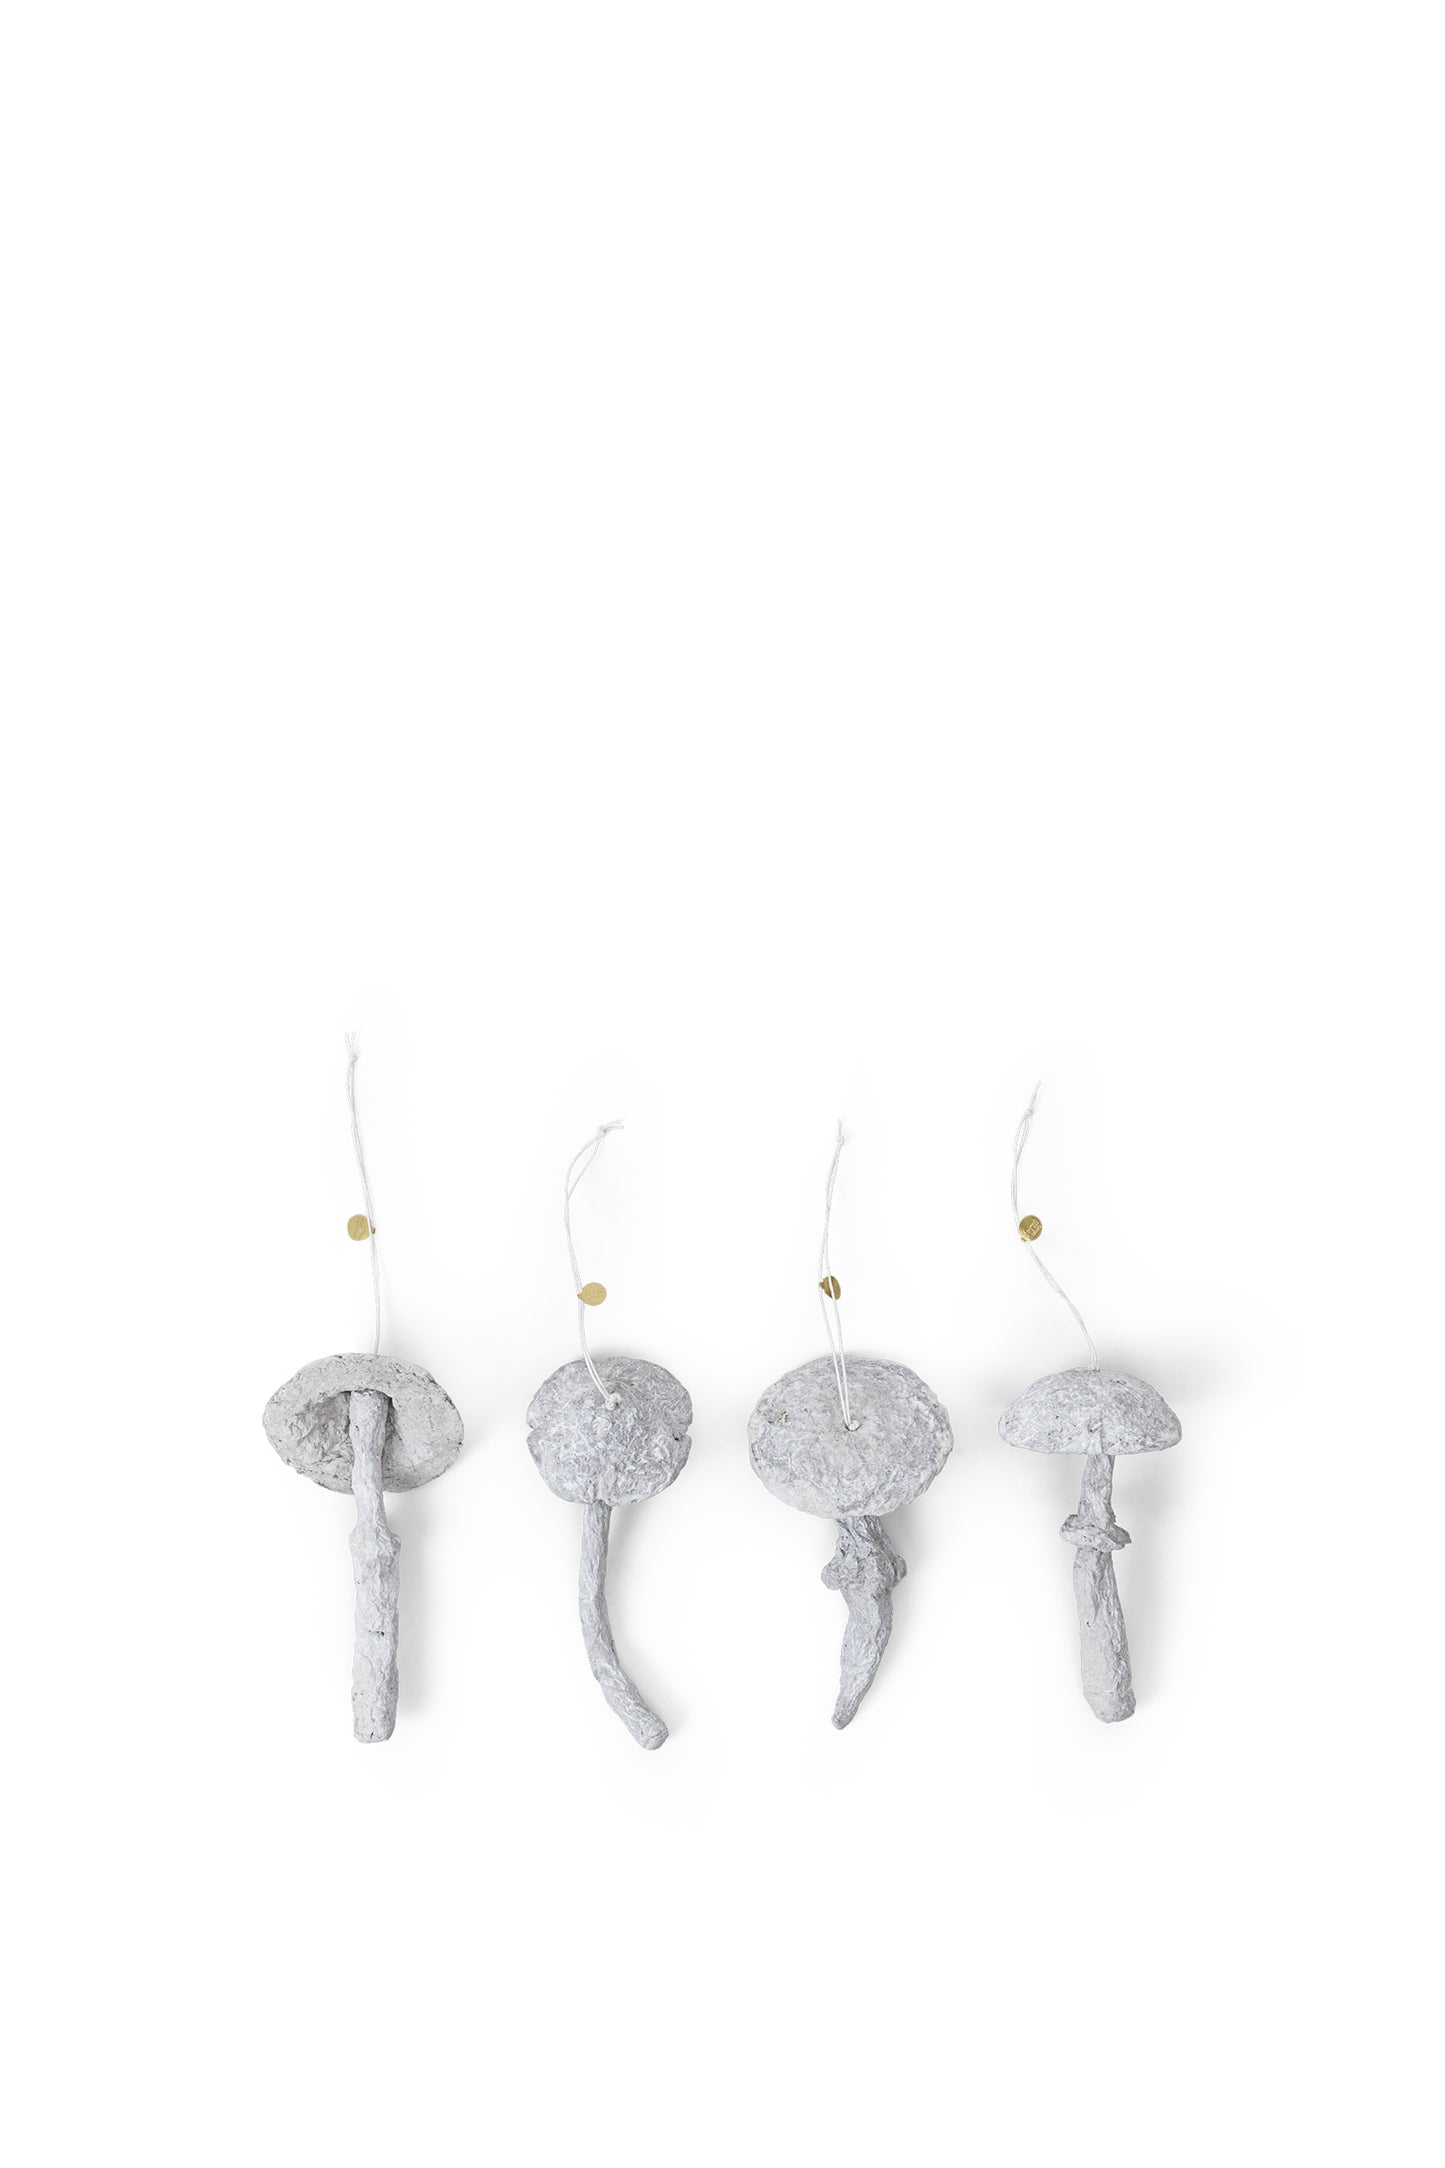 Mushroom Ornaments - Set of 4 Faded White